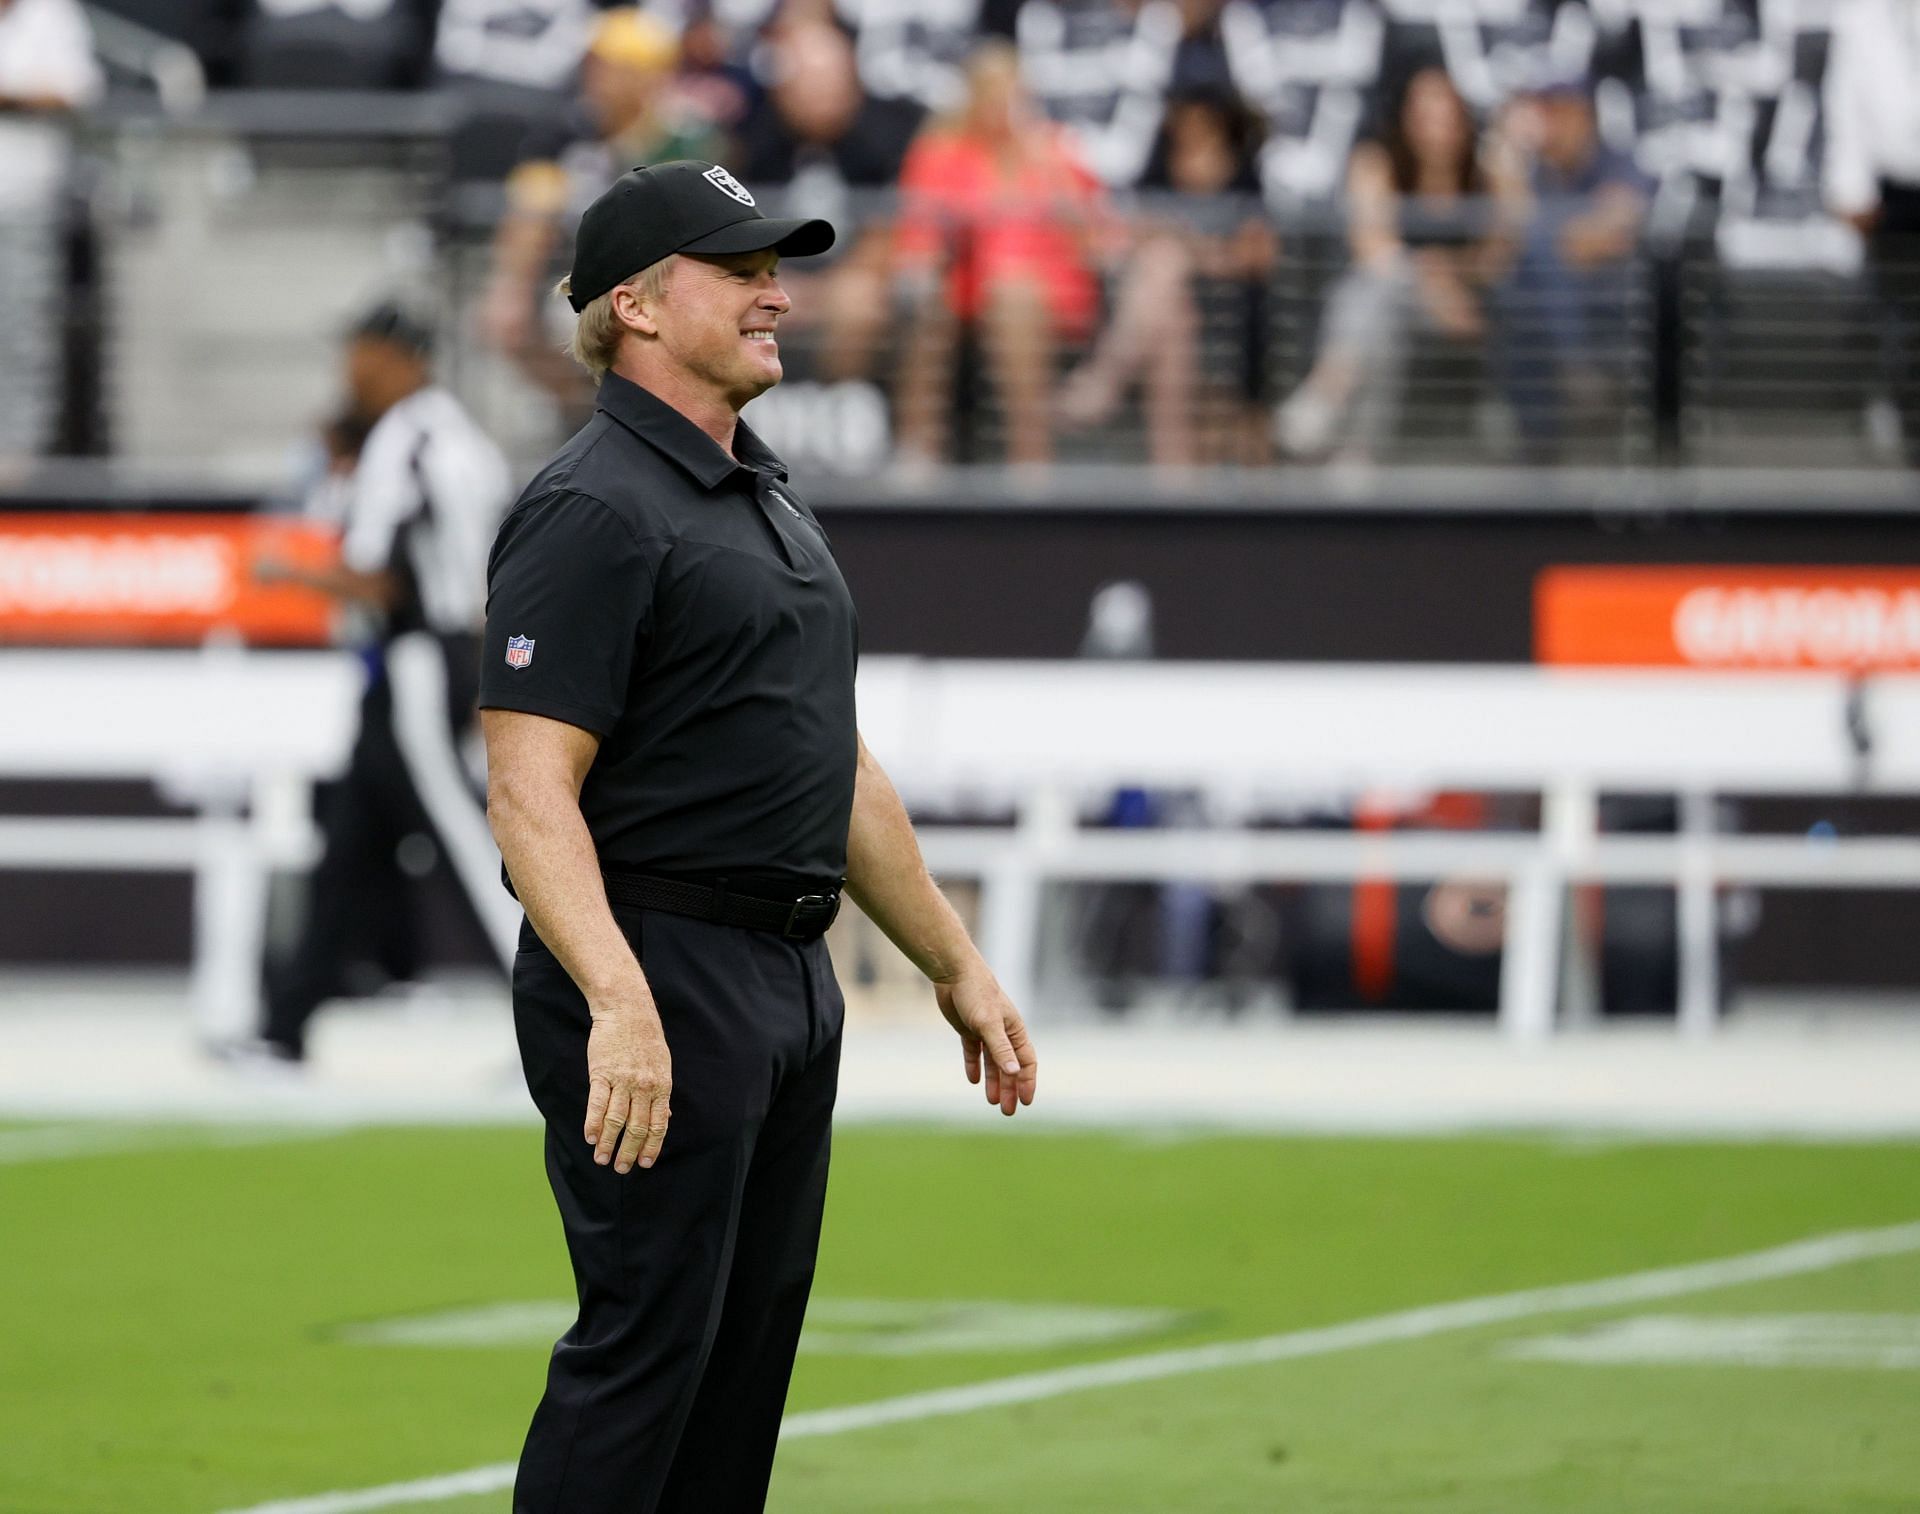 Former Las Vegas Raiders head coach John Gruden has filed a lawsuit against the NFL